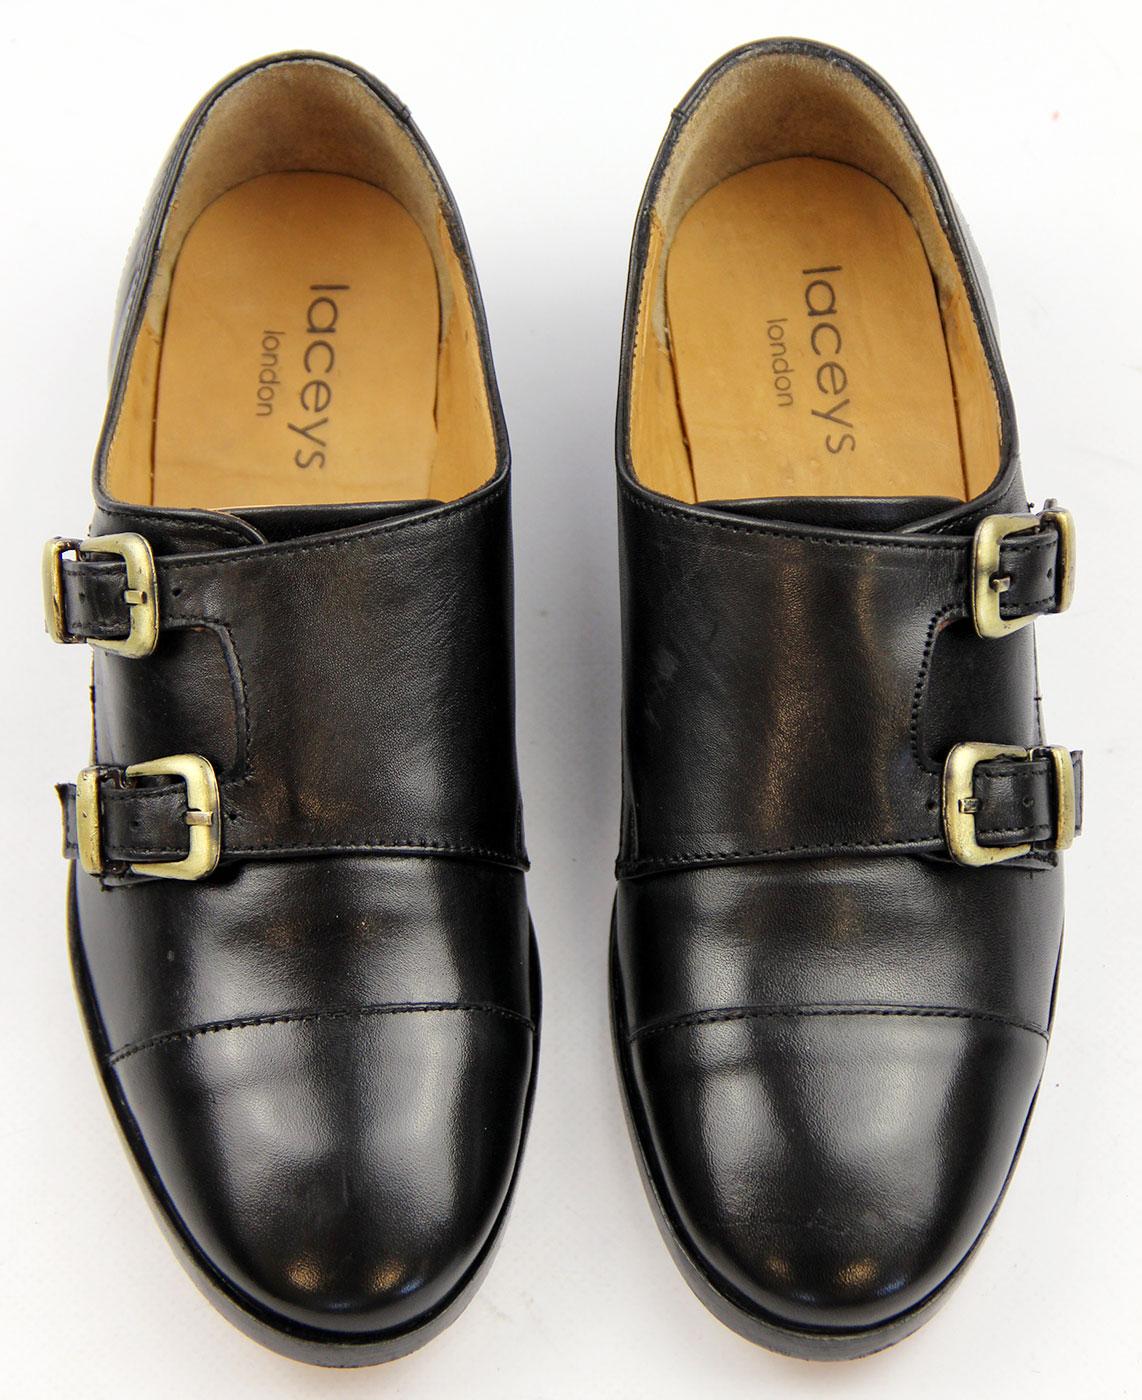 LACEYS Calypso Retro Mod Monk Strap Toe Cap Shoes in Black